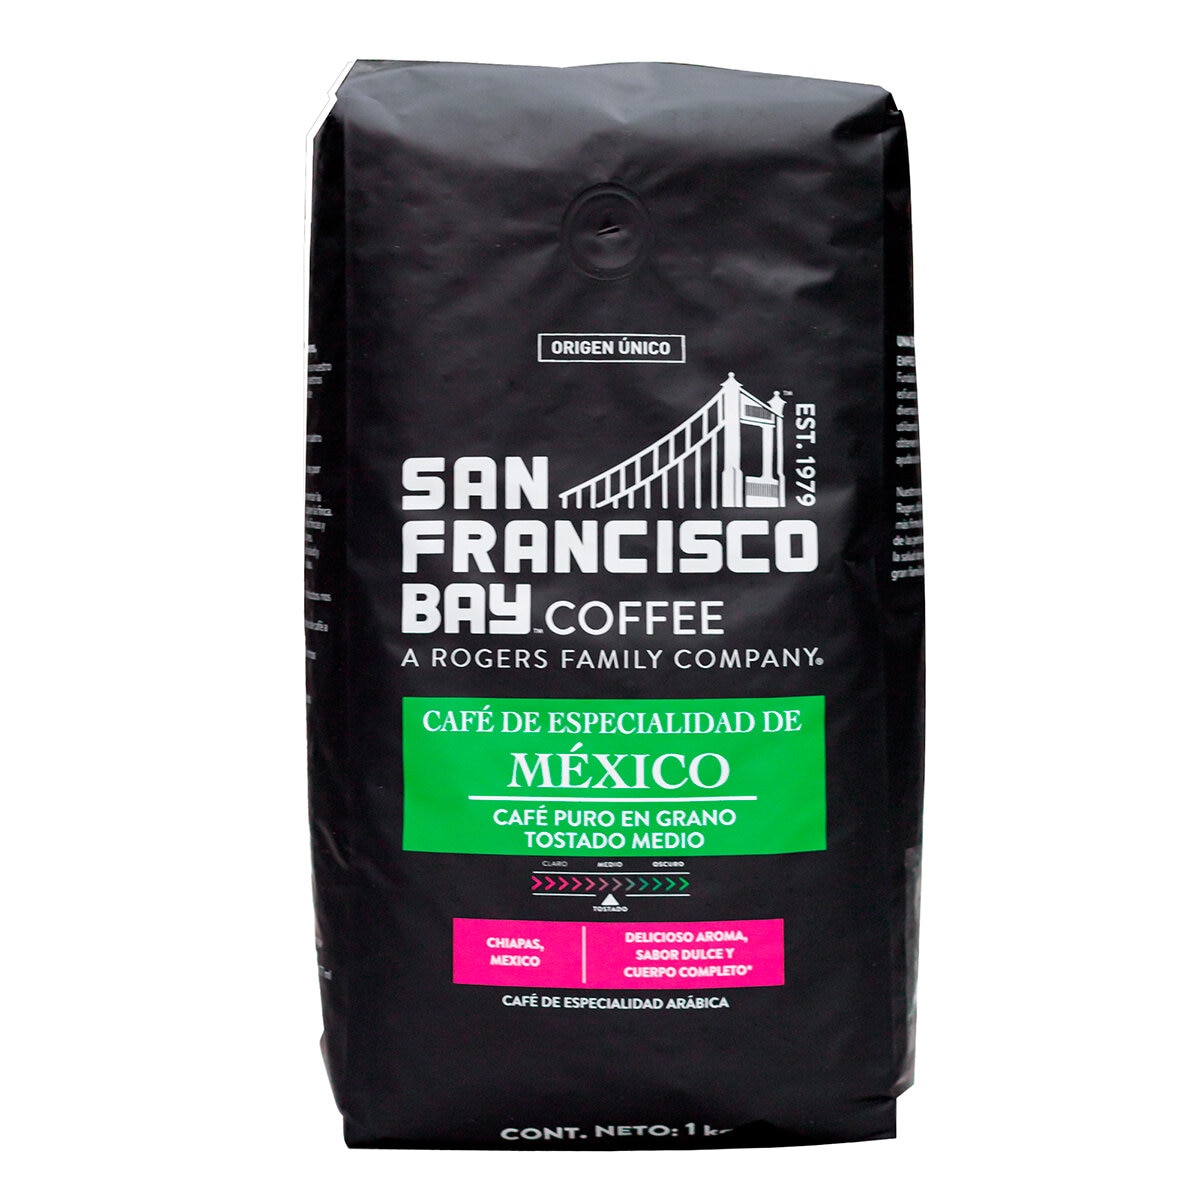 San Francisco Bay Coffee Café Chiapas México 1 kg